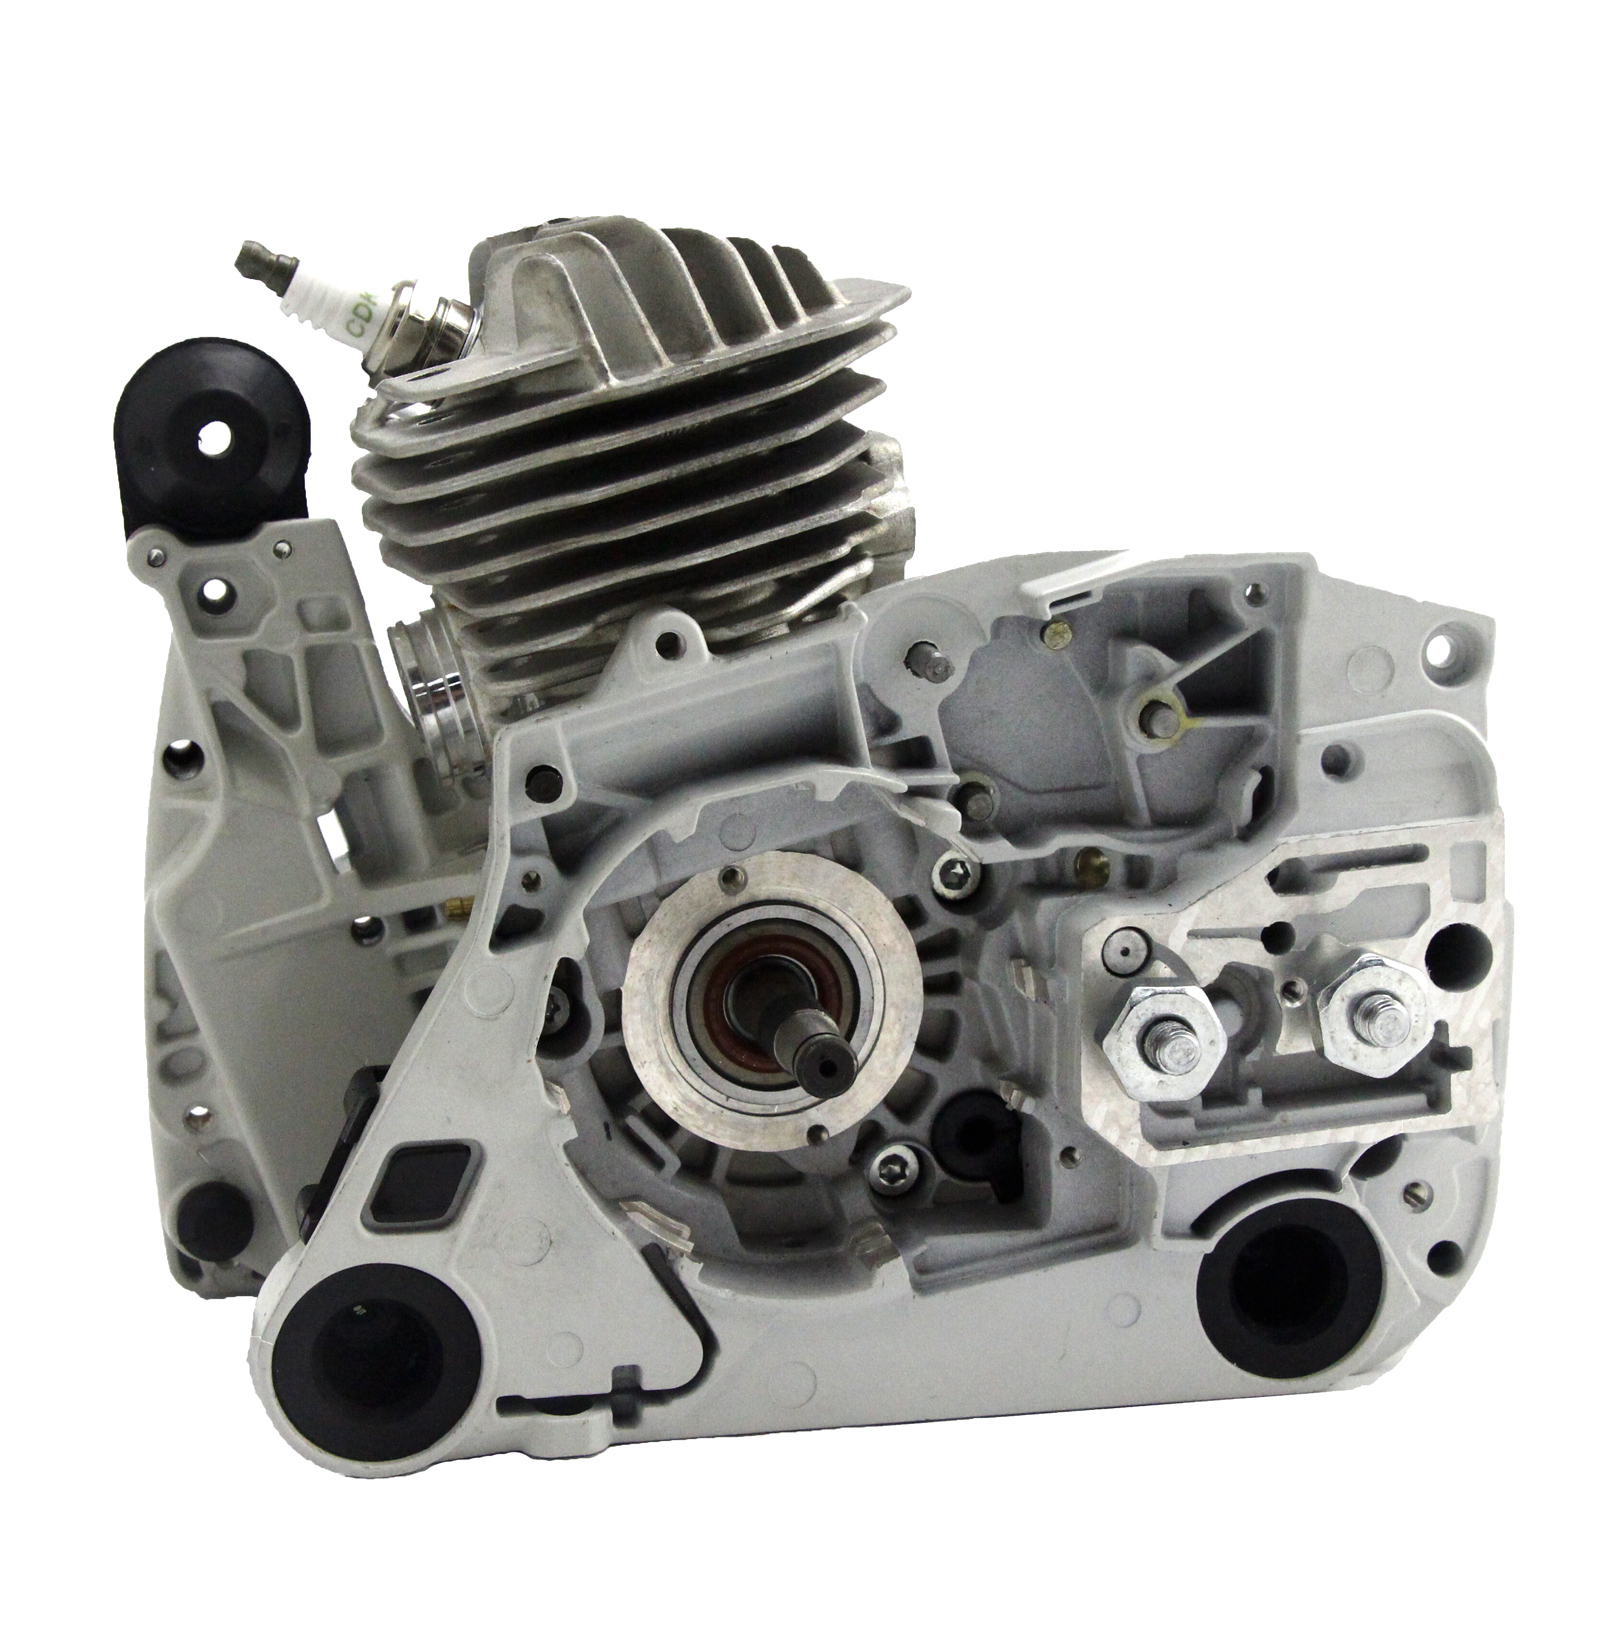 Aftermarket Stihl 044 ms440 Chainsaw Engine Motor With Cylinder Piston Kit Crankshaft 1128 020 2136, 1128 020 2122